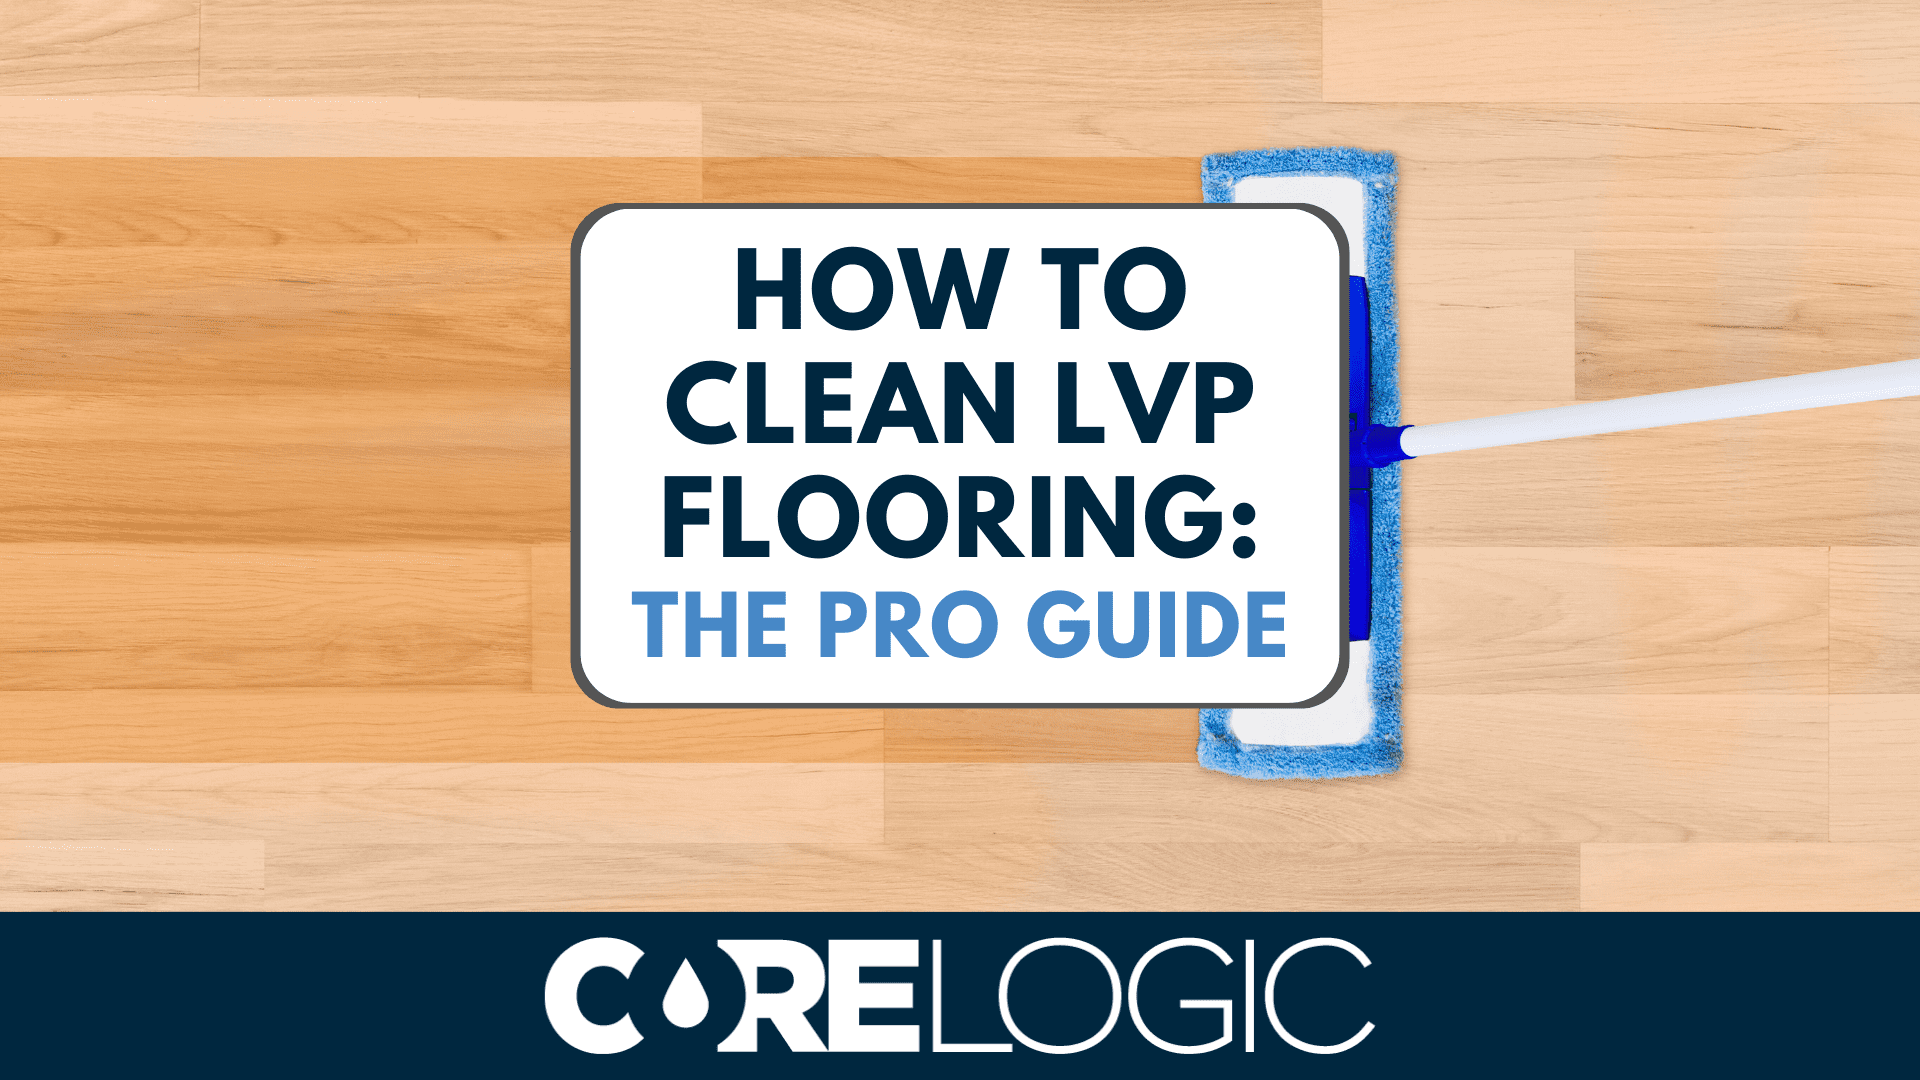 How To Clean Luxury Vinyl Plank (LVP) Flooring